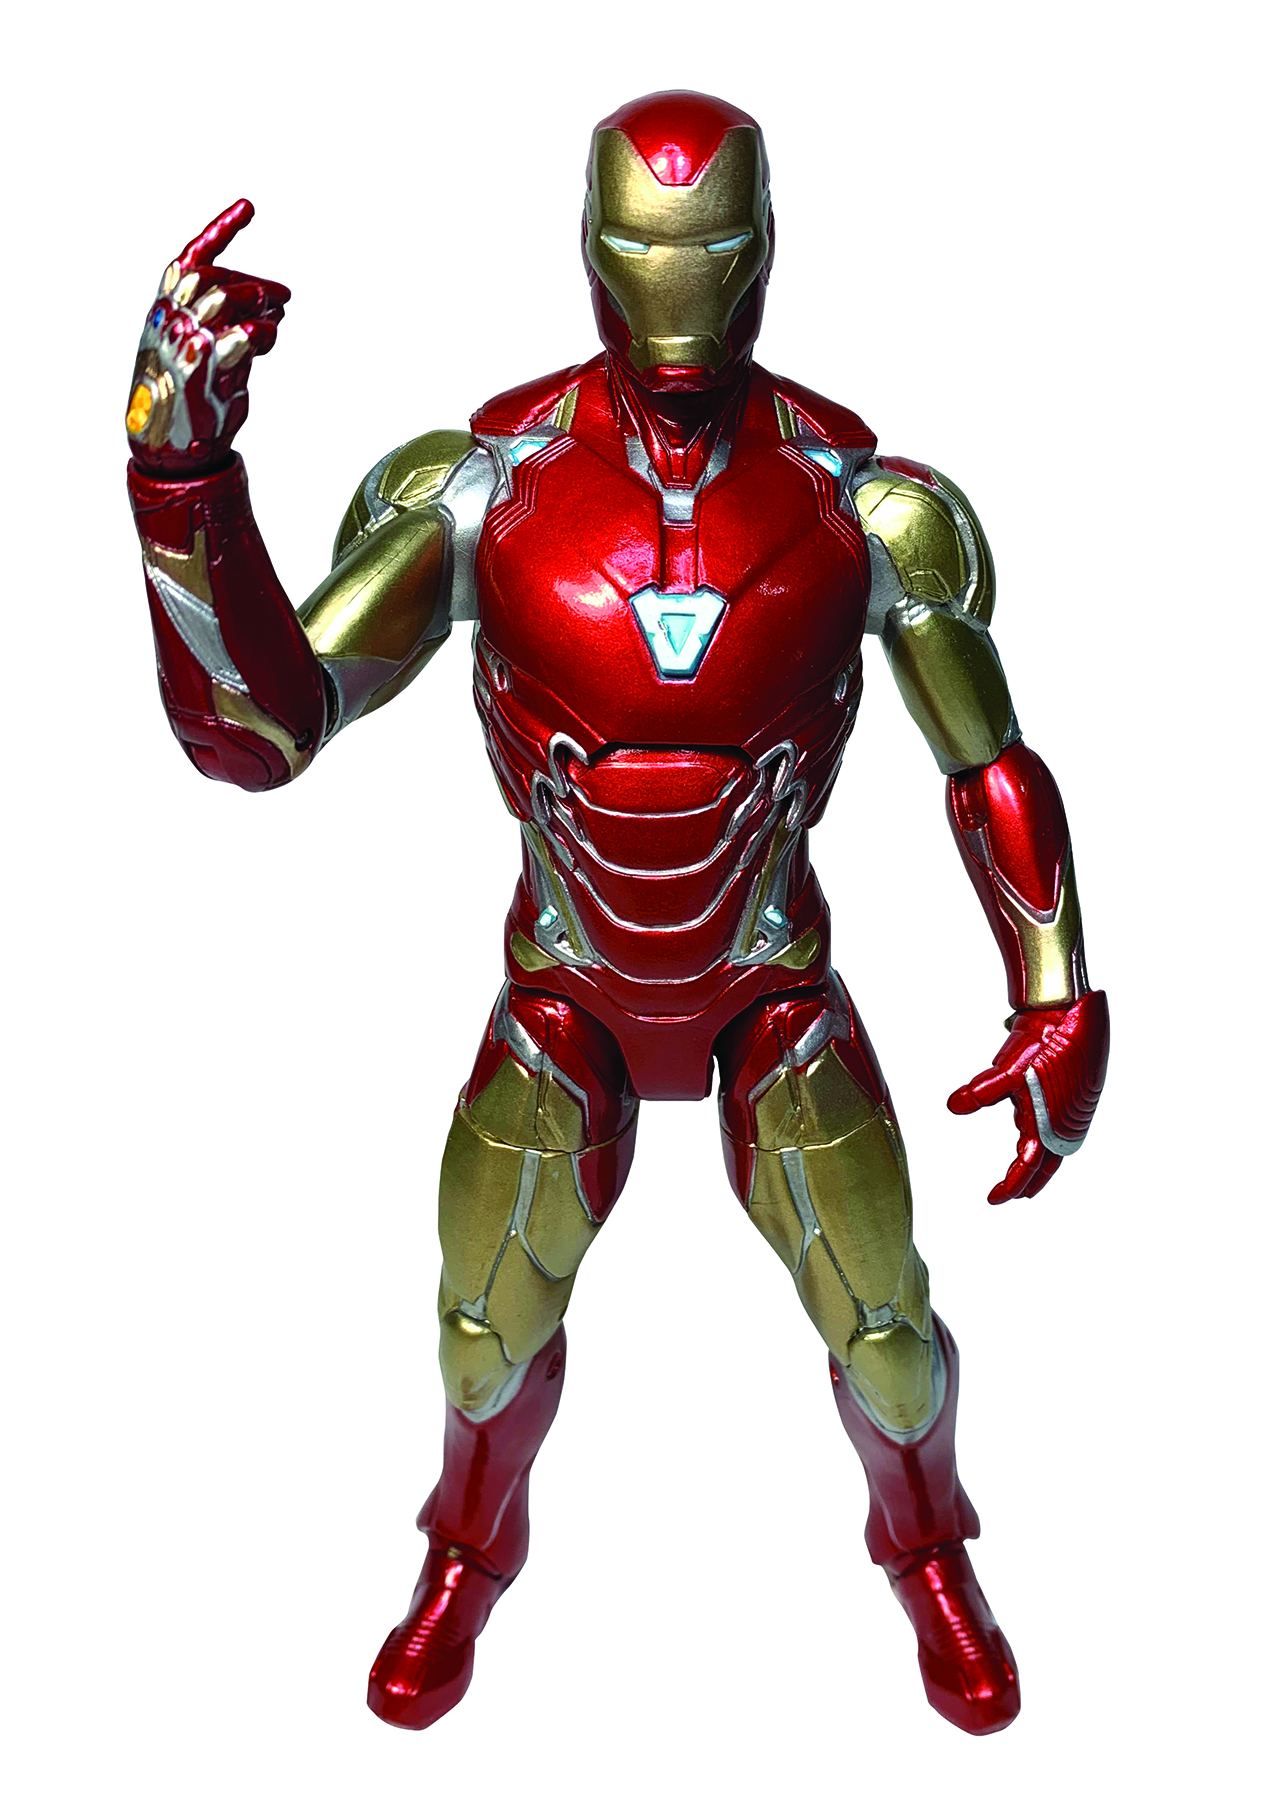 Marvel Select Iron Man MK 85 Action Figure Avengers Endgame Diamond Select Toys 